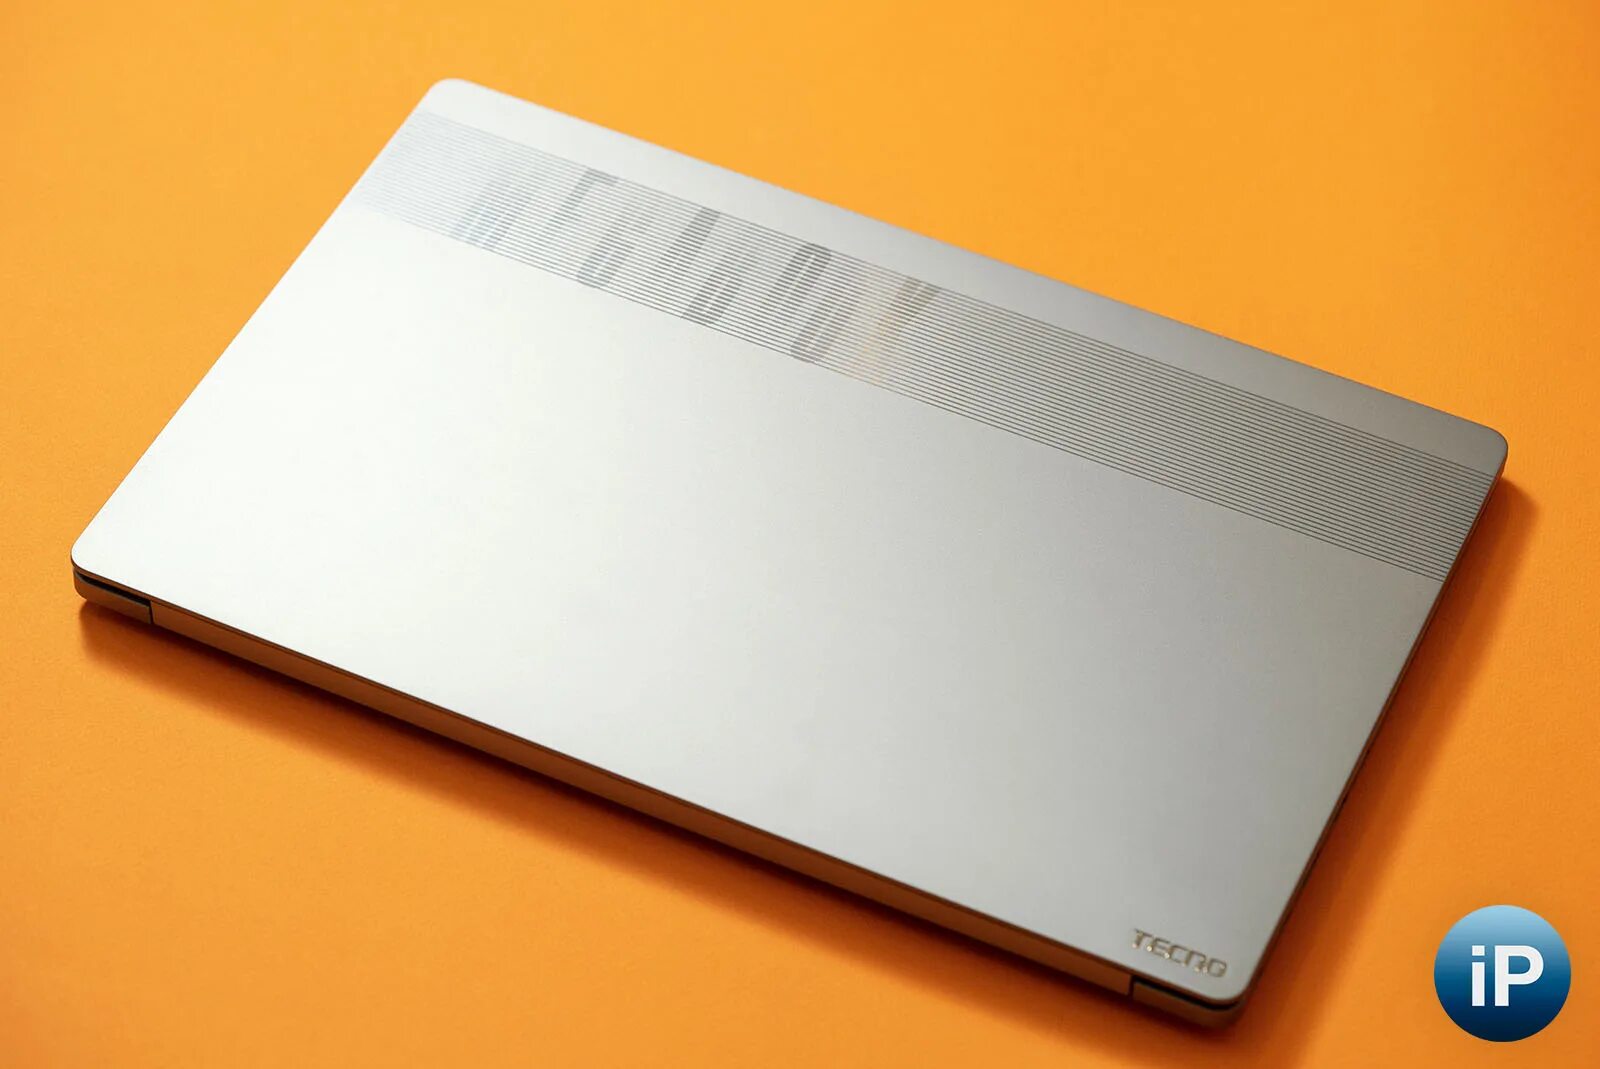 Ноутбук MEGABOOK. Techno ноутбук MEGABOOK цвета. Матрица ноутбука Techno MEGABOOK t1. Ноутбук Tecno MEGABOOK t1 синий. Tecno megabook t1 ryzen